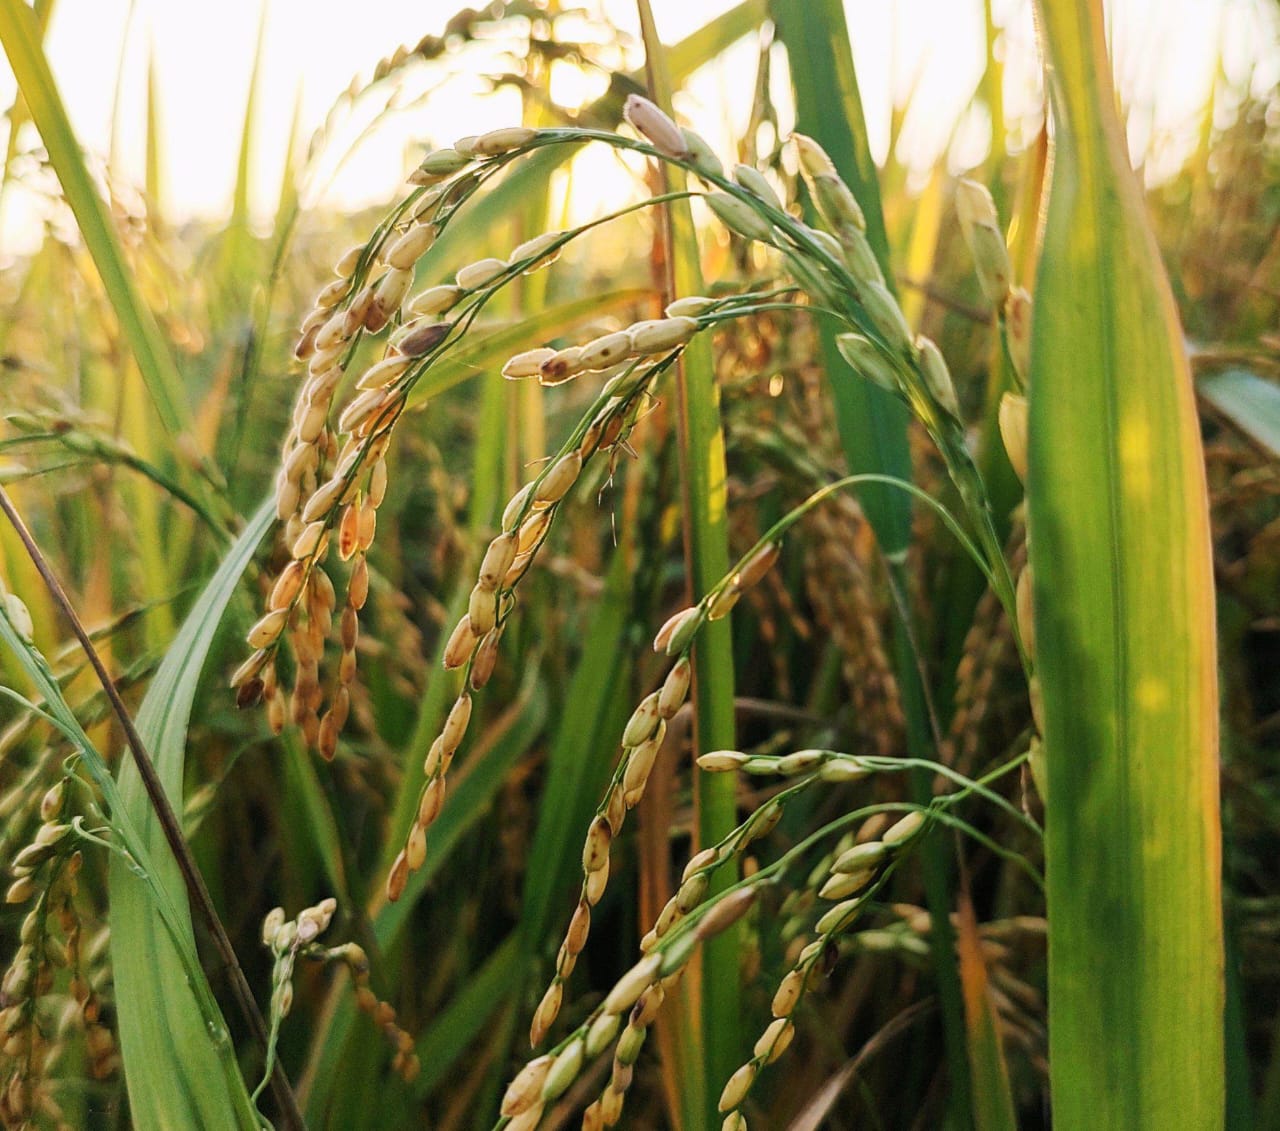 University of Embu researchers achieve breakthrough with hybrid basmati rice